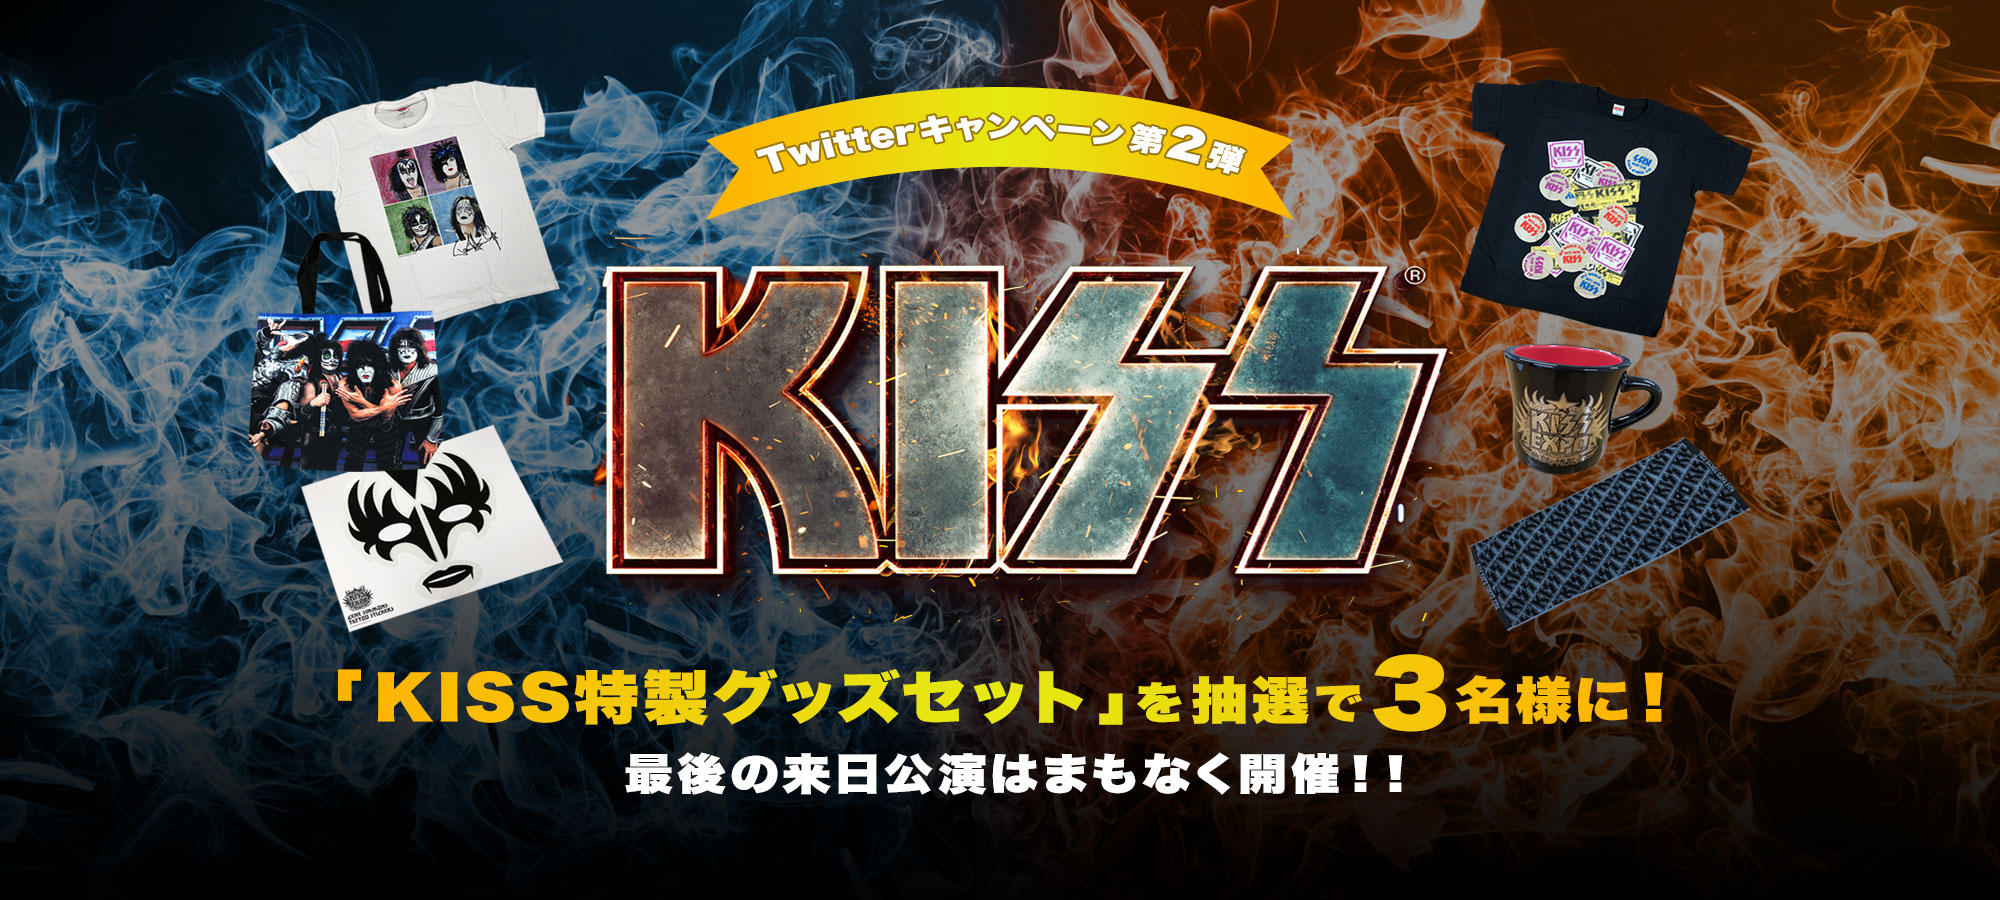 KISS Twitterキャンペーン第2弾「KISS特製グッズセット」を抽選で3名様に！最後の来日公演はまもなく開催！！